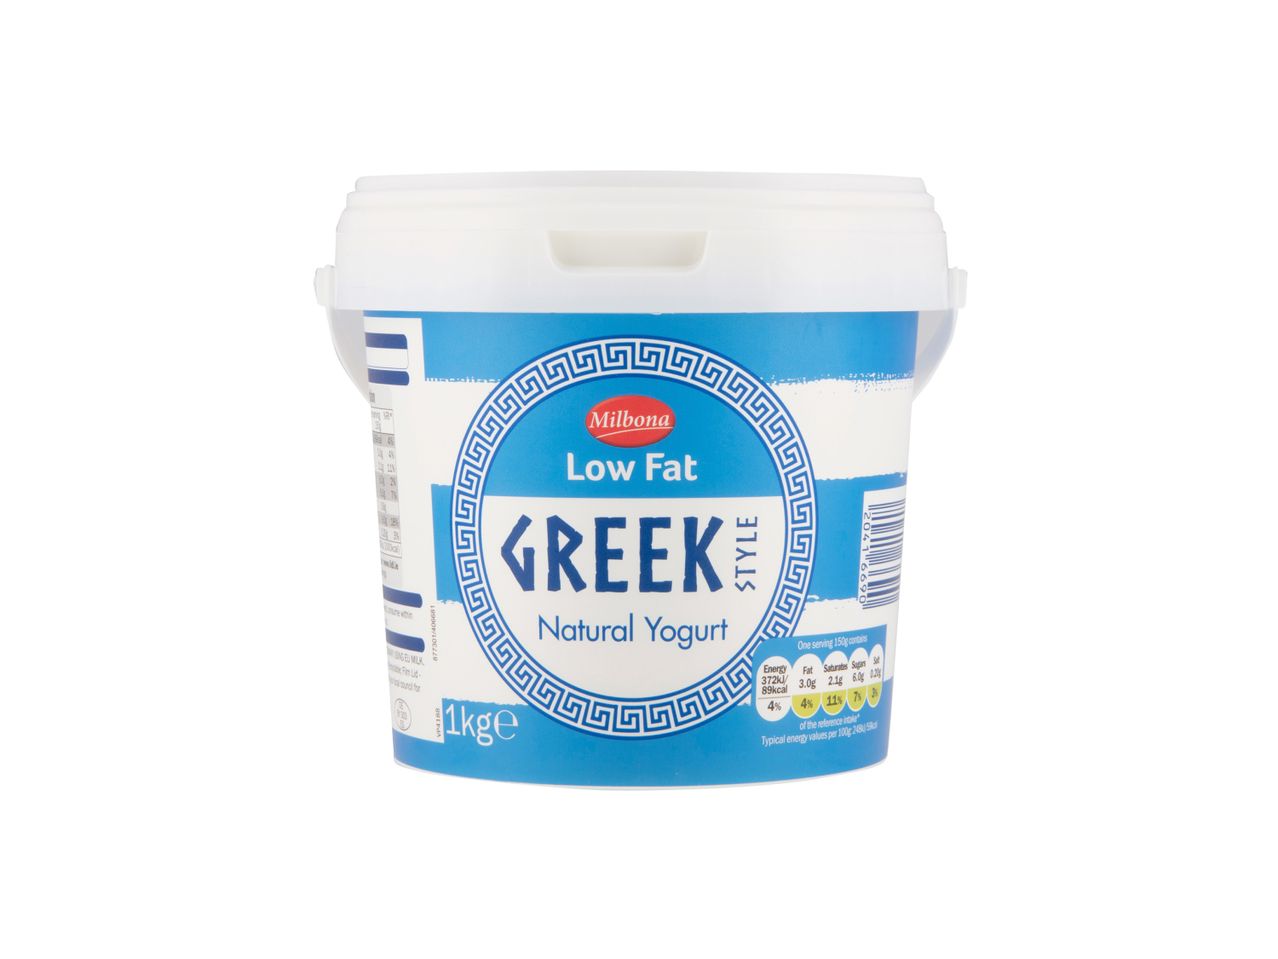 Go to full screen view: Low Fat Greek Style Yogurt - Image 1